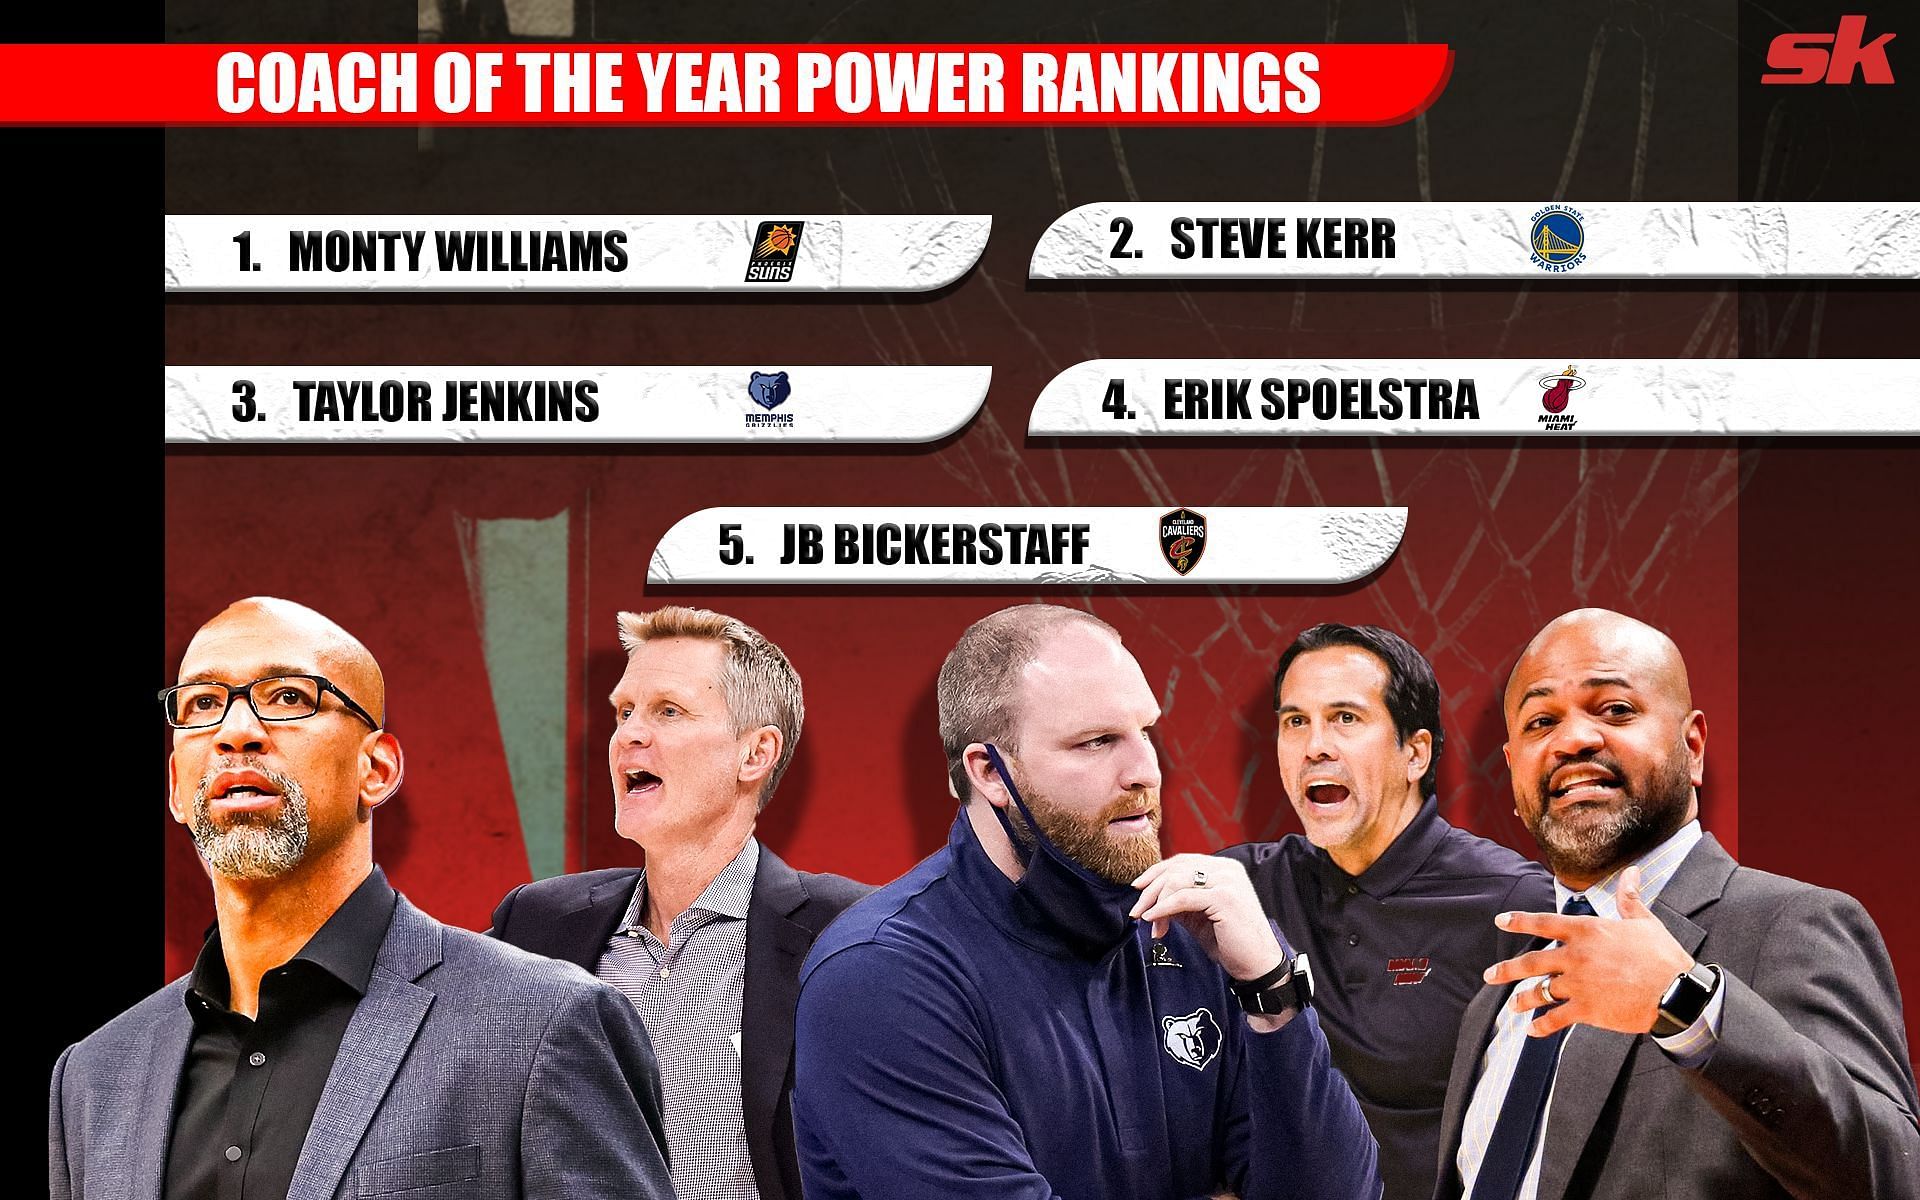 Latest NBA Coach of the Year Power Rankings by Sportskeeda